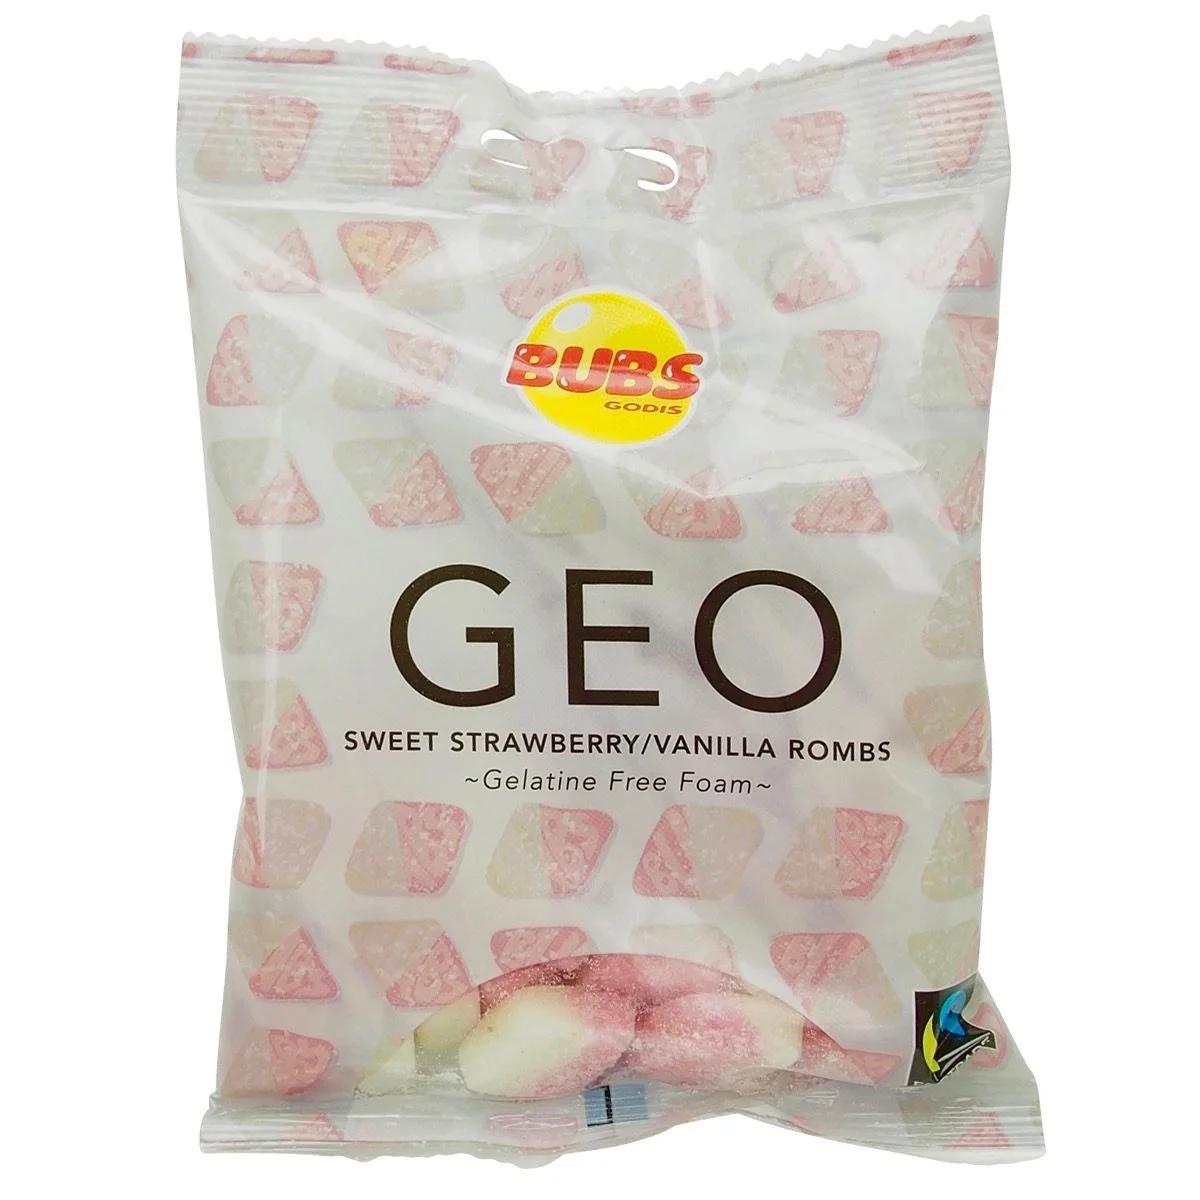 BUBS GEO Sweet Strawberry/Vanilla Rombs (90g) 1